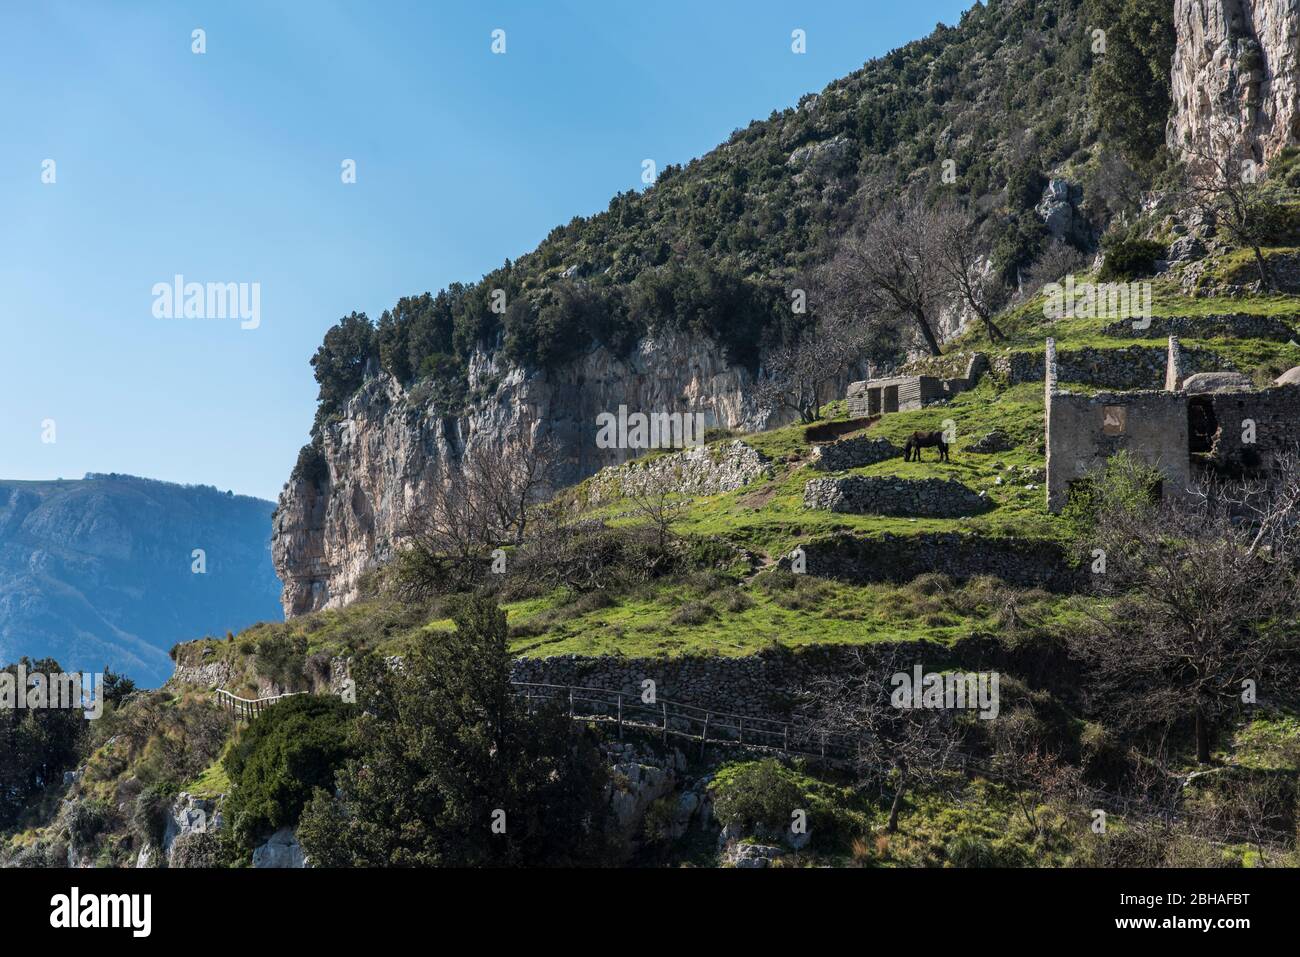 The Way of the Gods: Sentiero degli Dei. Incredibly beautiful hiking path high above the Amalfitana or Amalfi coast in Italy, from Agerola to Positano. March 2019. Horse and ruin. Stock Photo